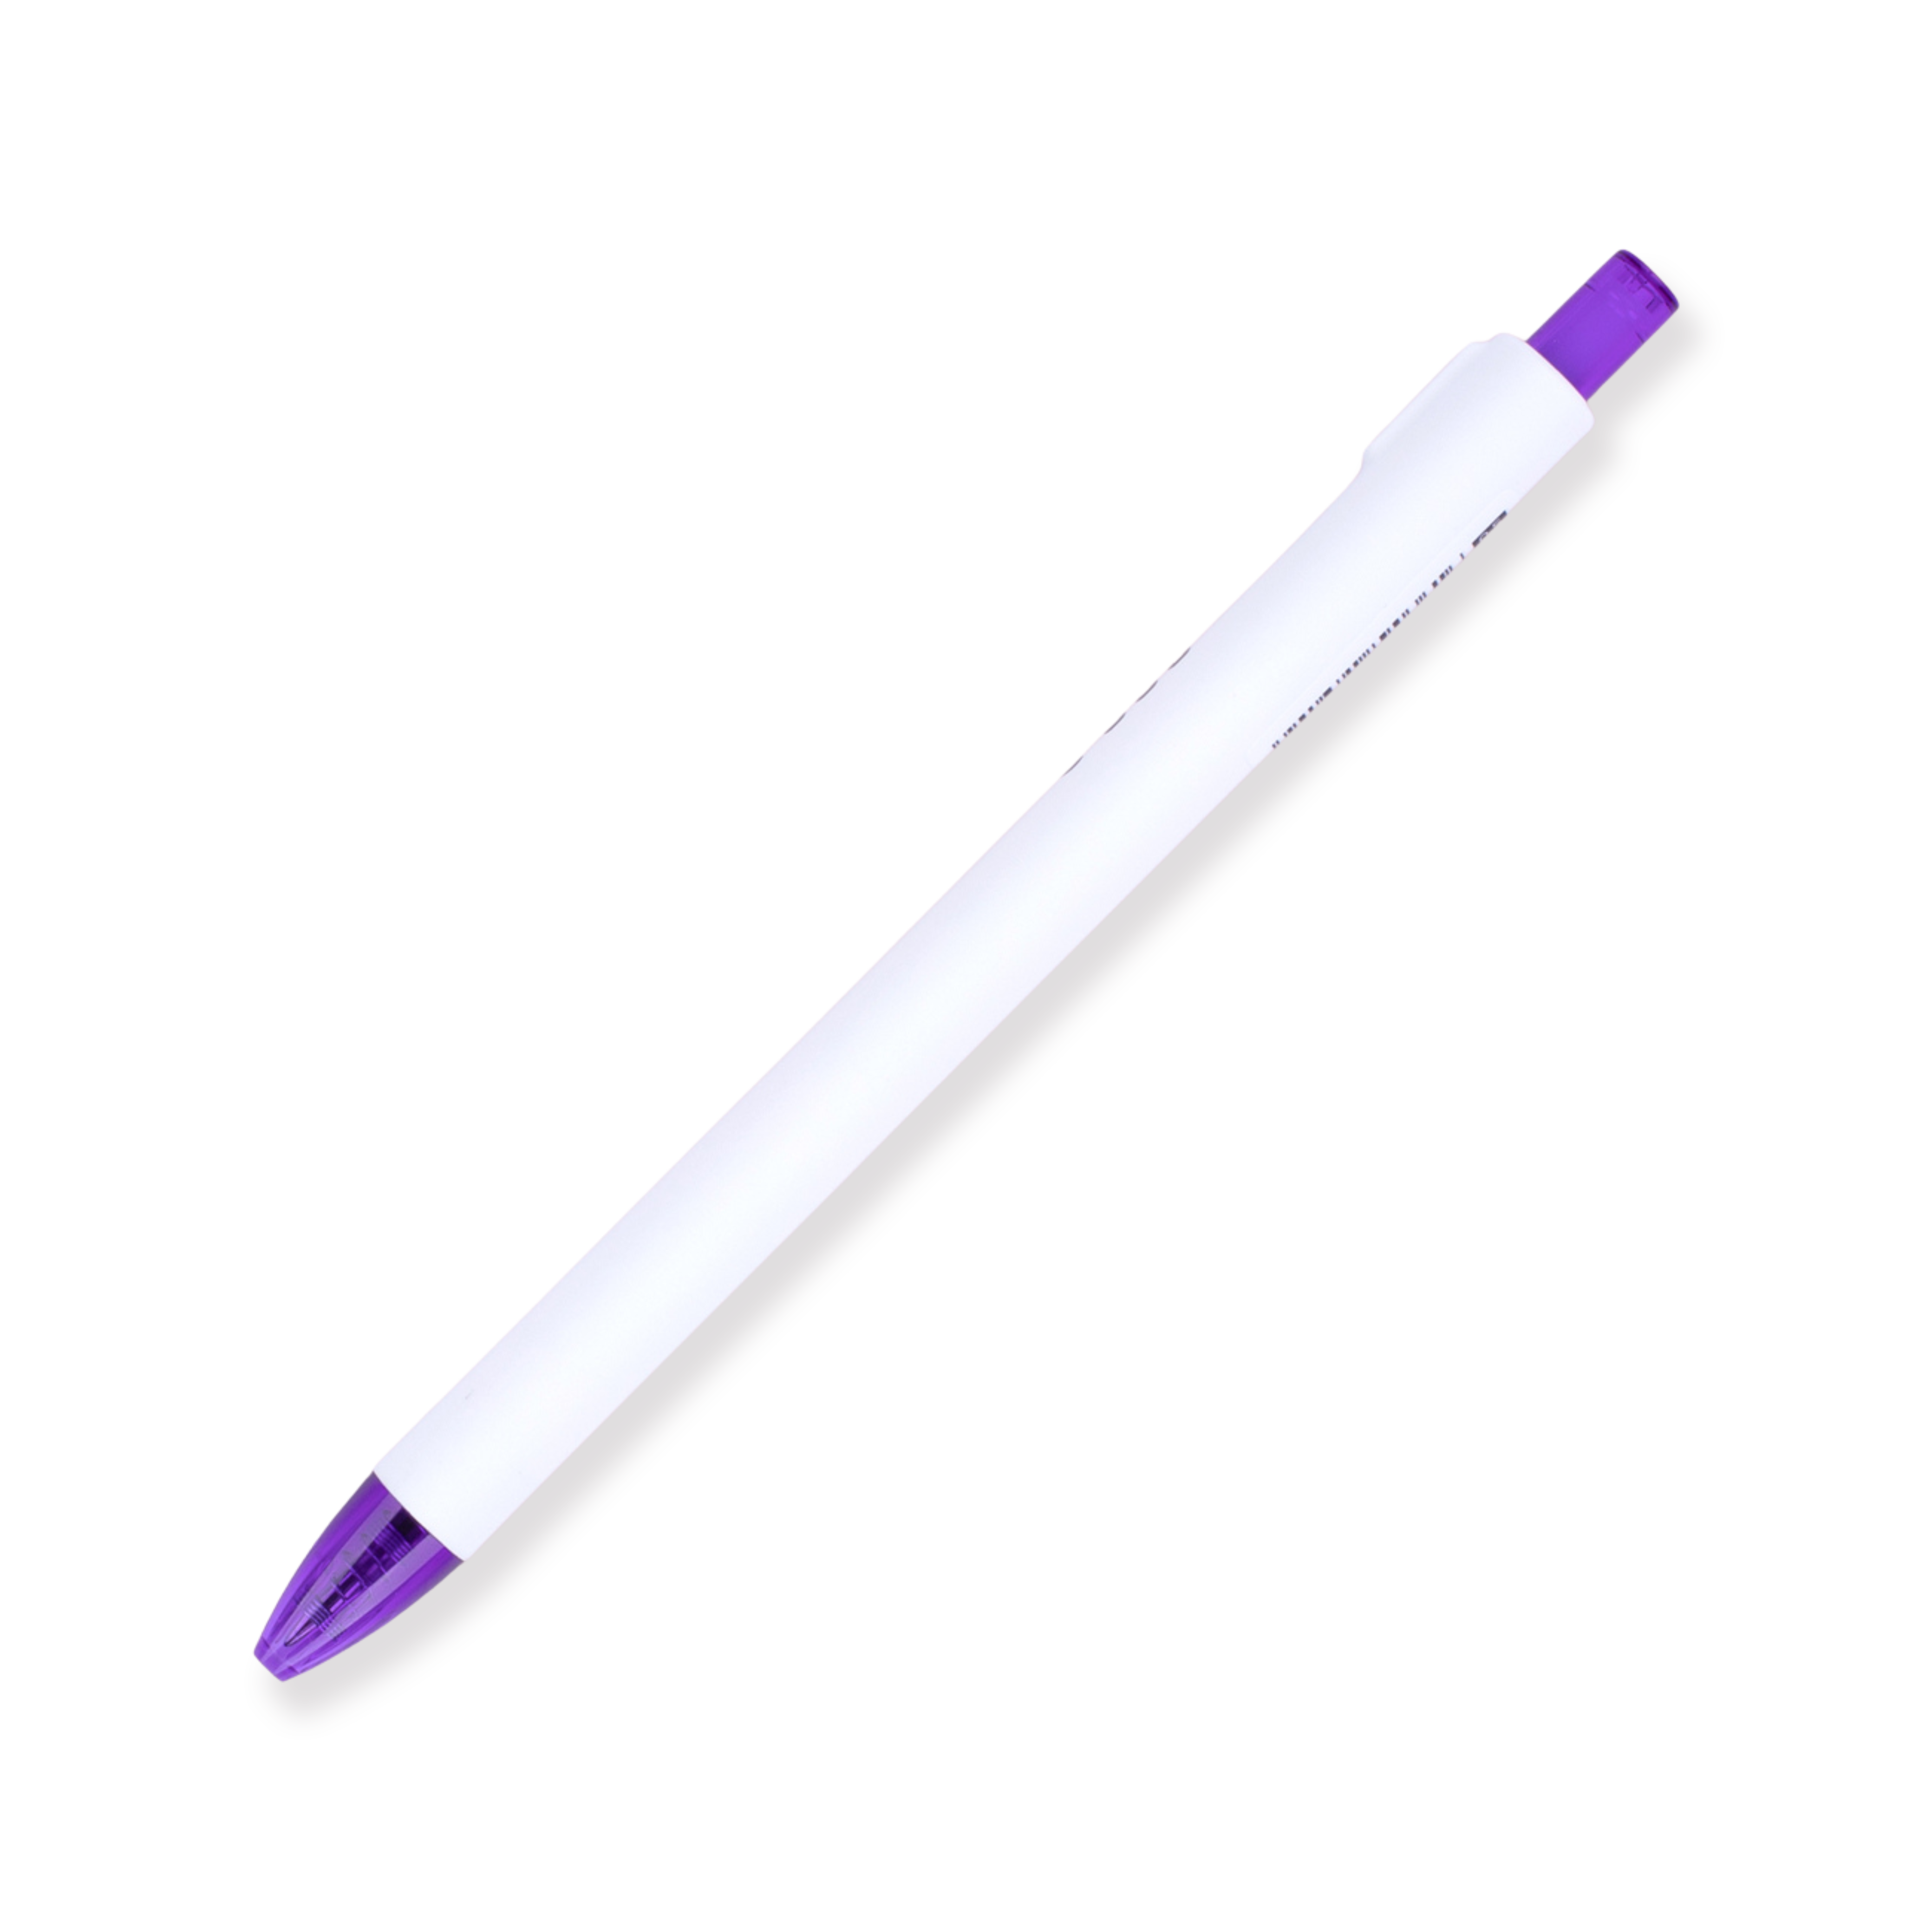 Zebra Rainbow Retractable Gel Pen 0.5mm - Purple - Stationery Pal